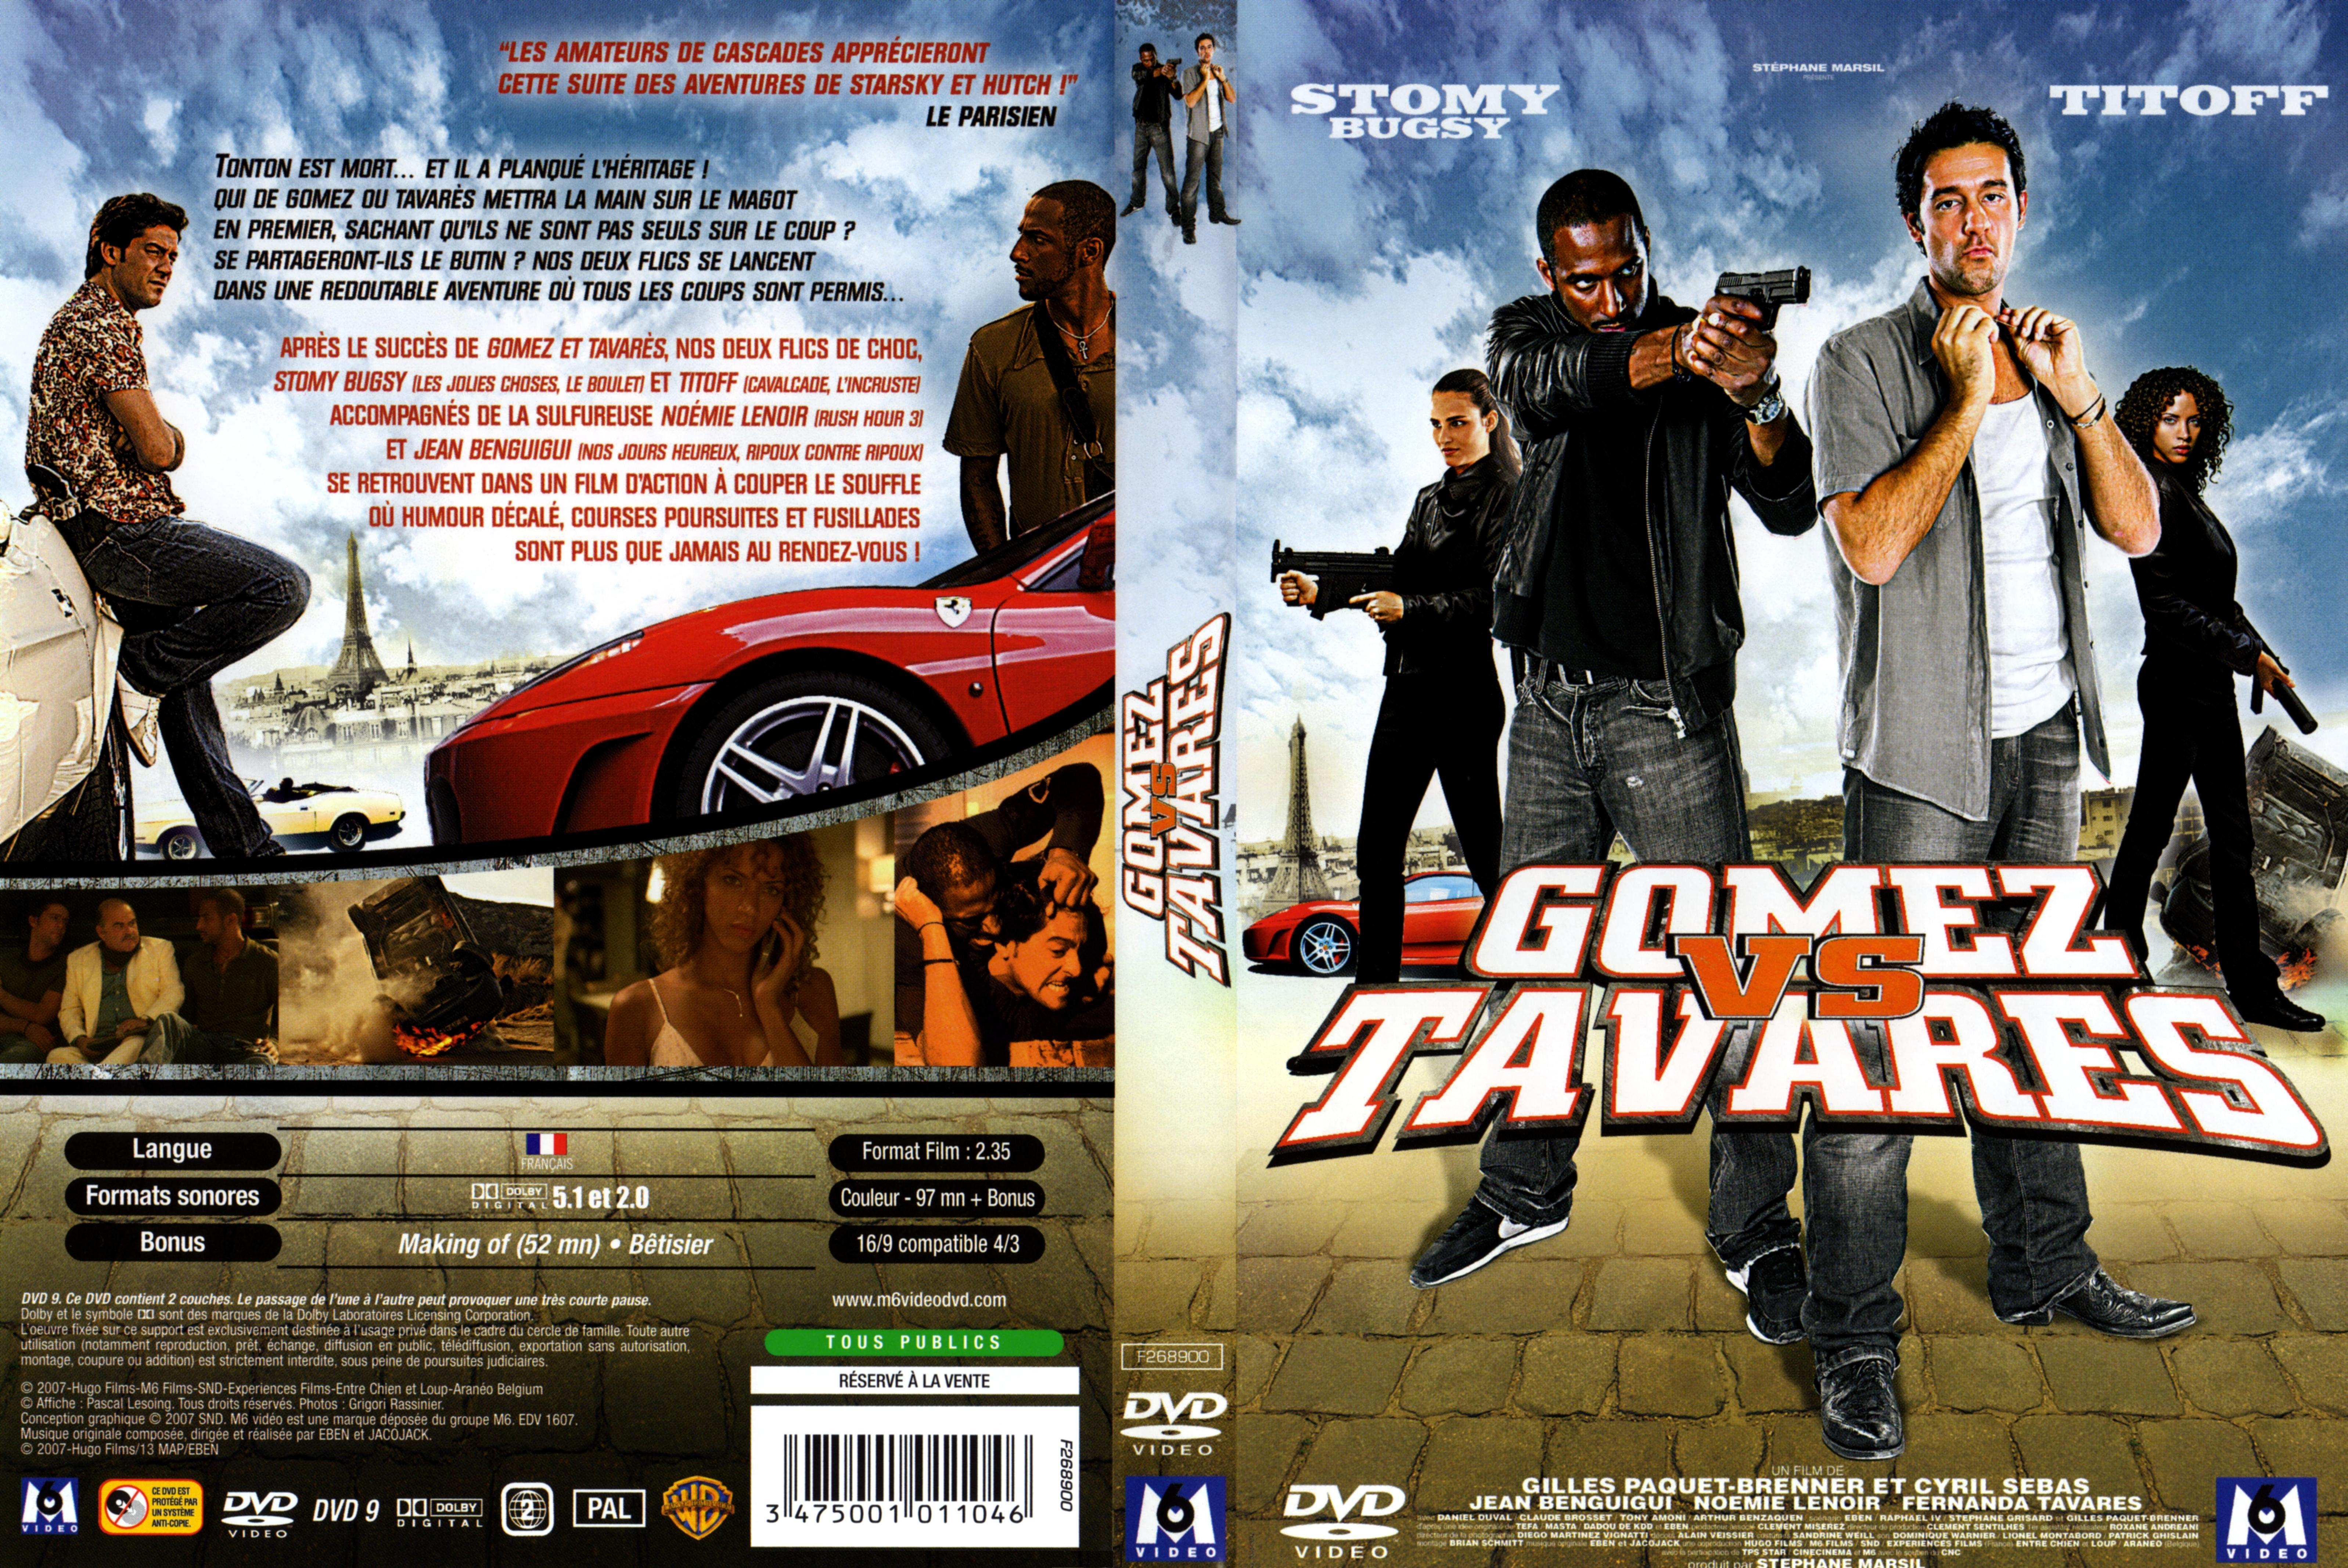 Jaquette DVD Gomez vs Tavares